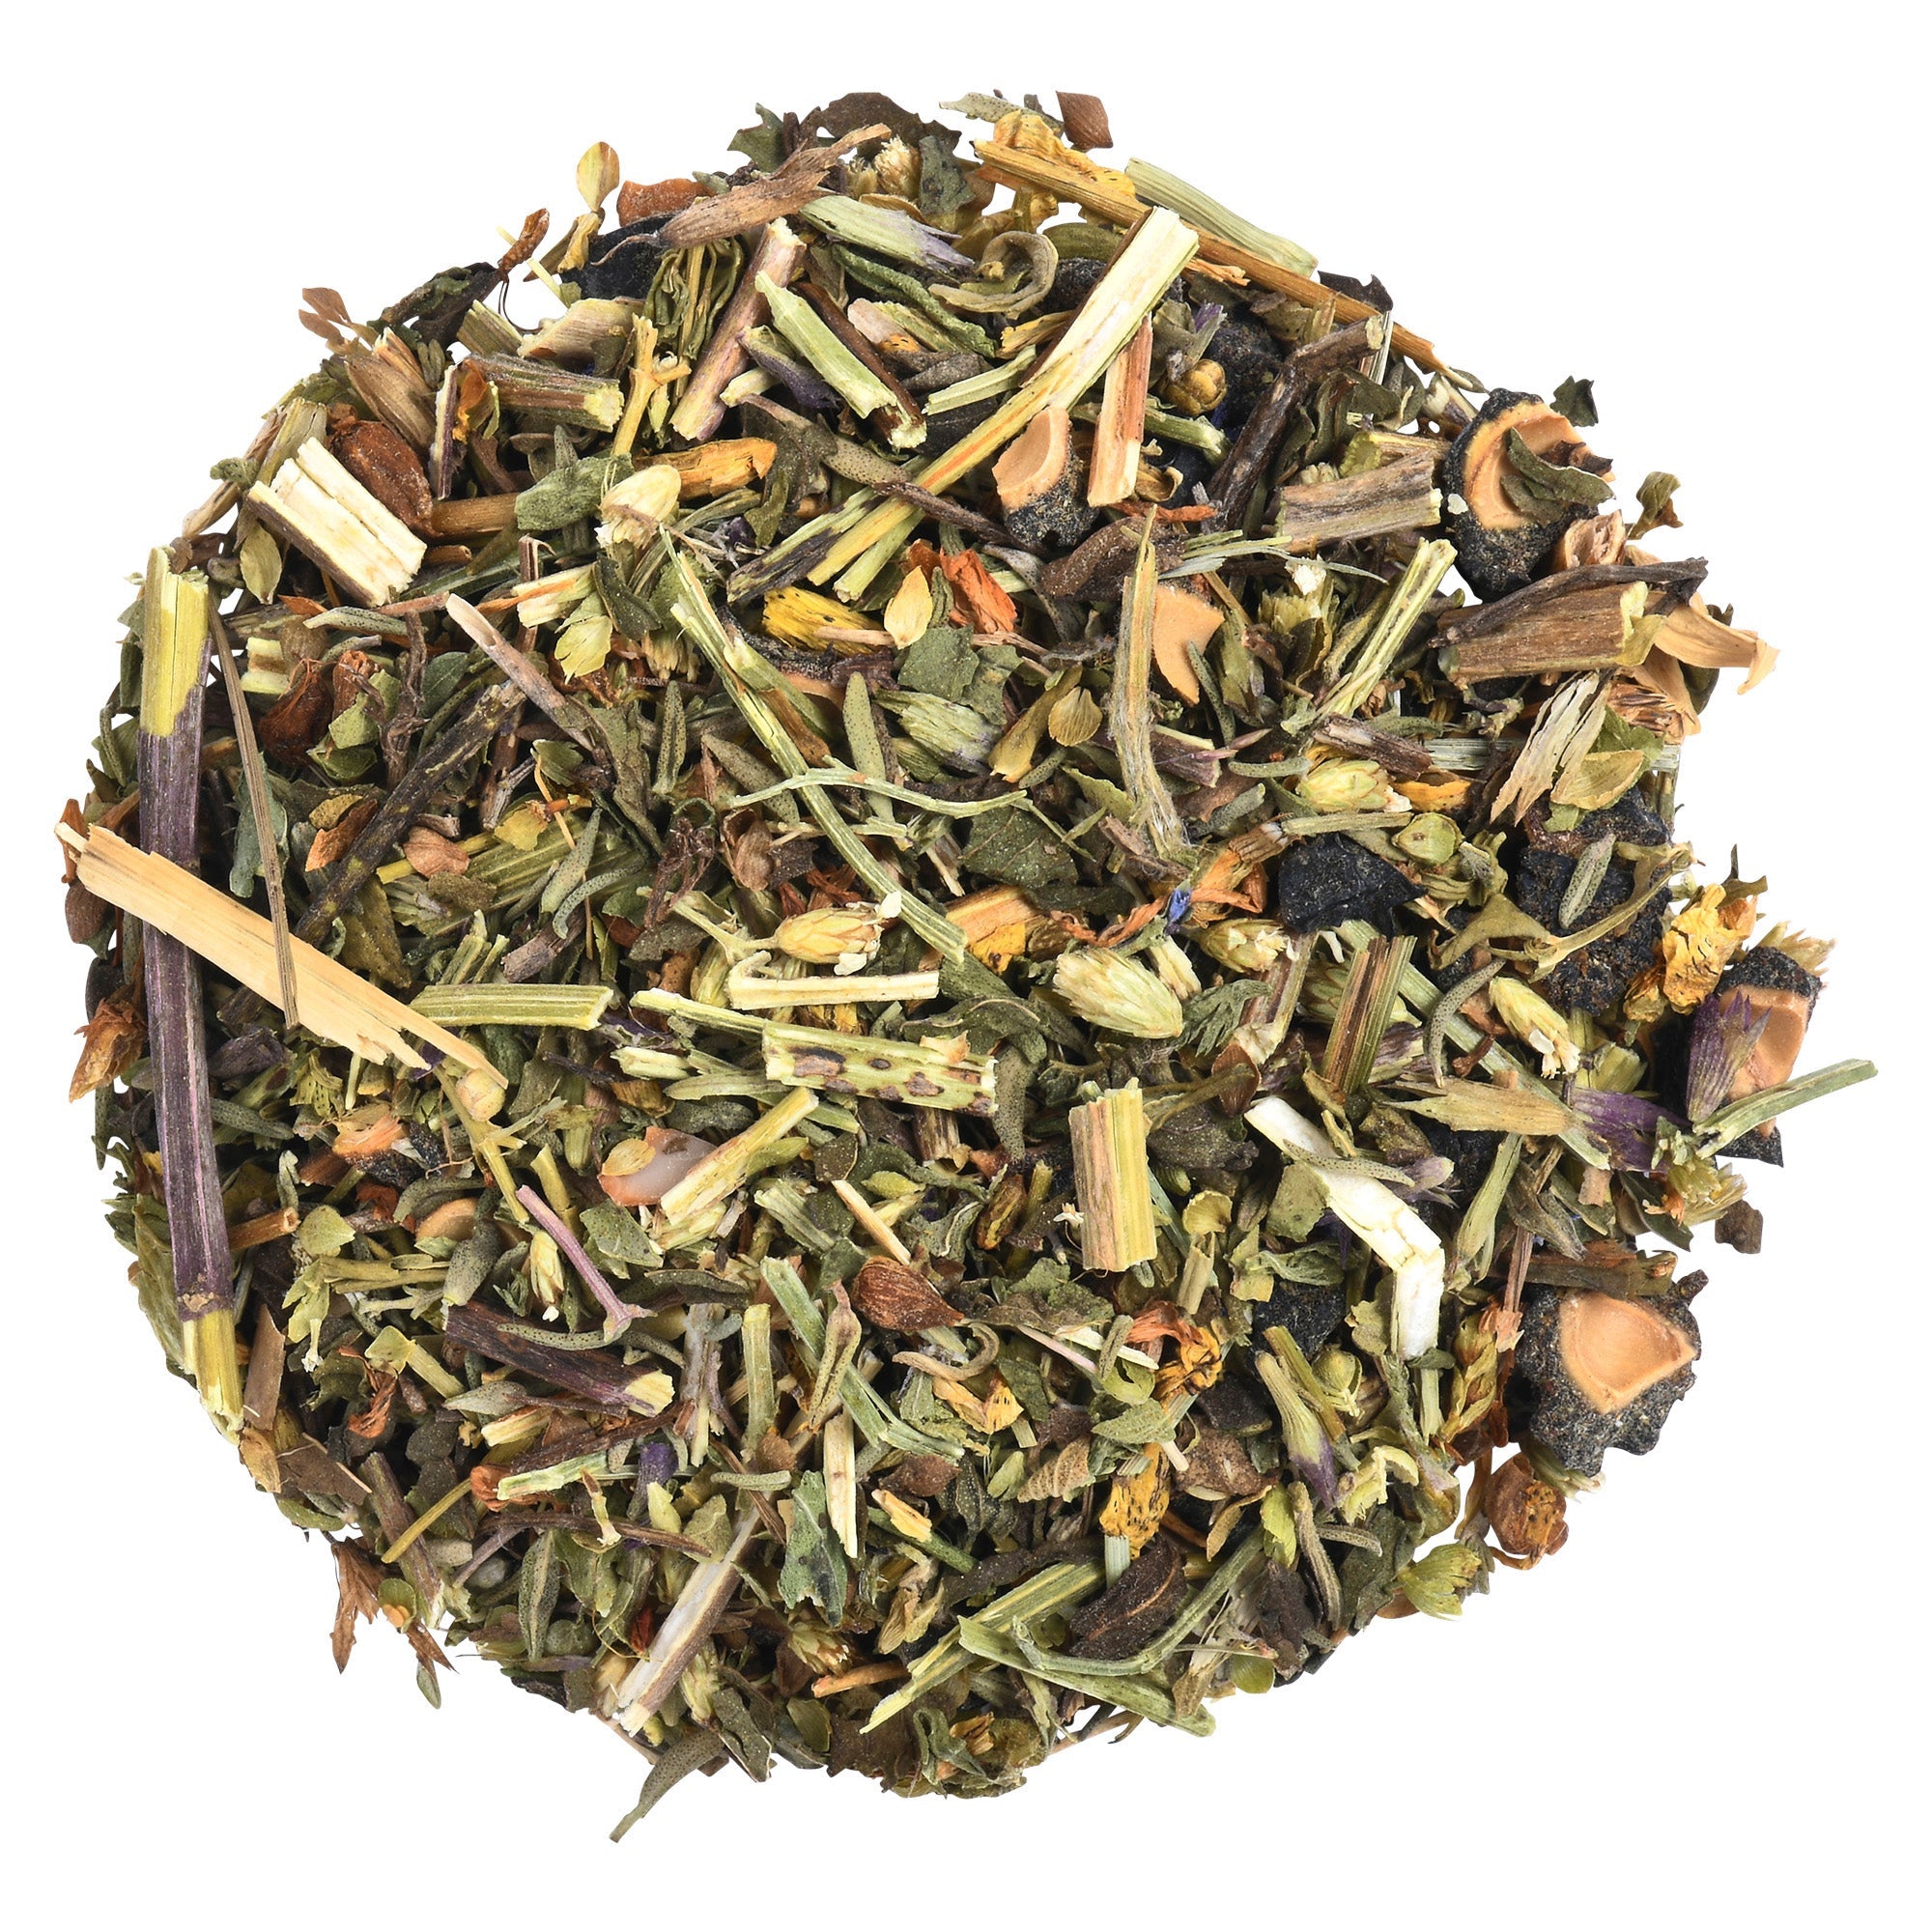 Digestive Organic Blend 50g 1.76oz Herbal Tea